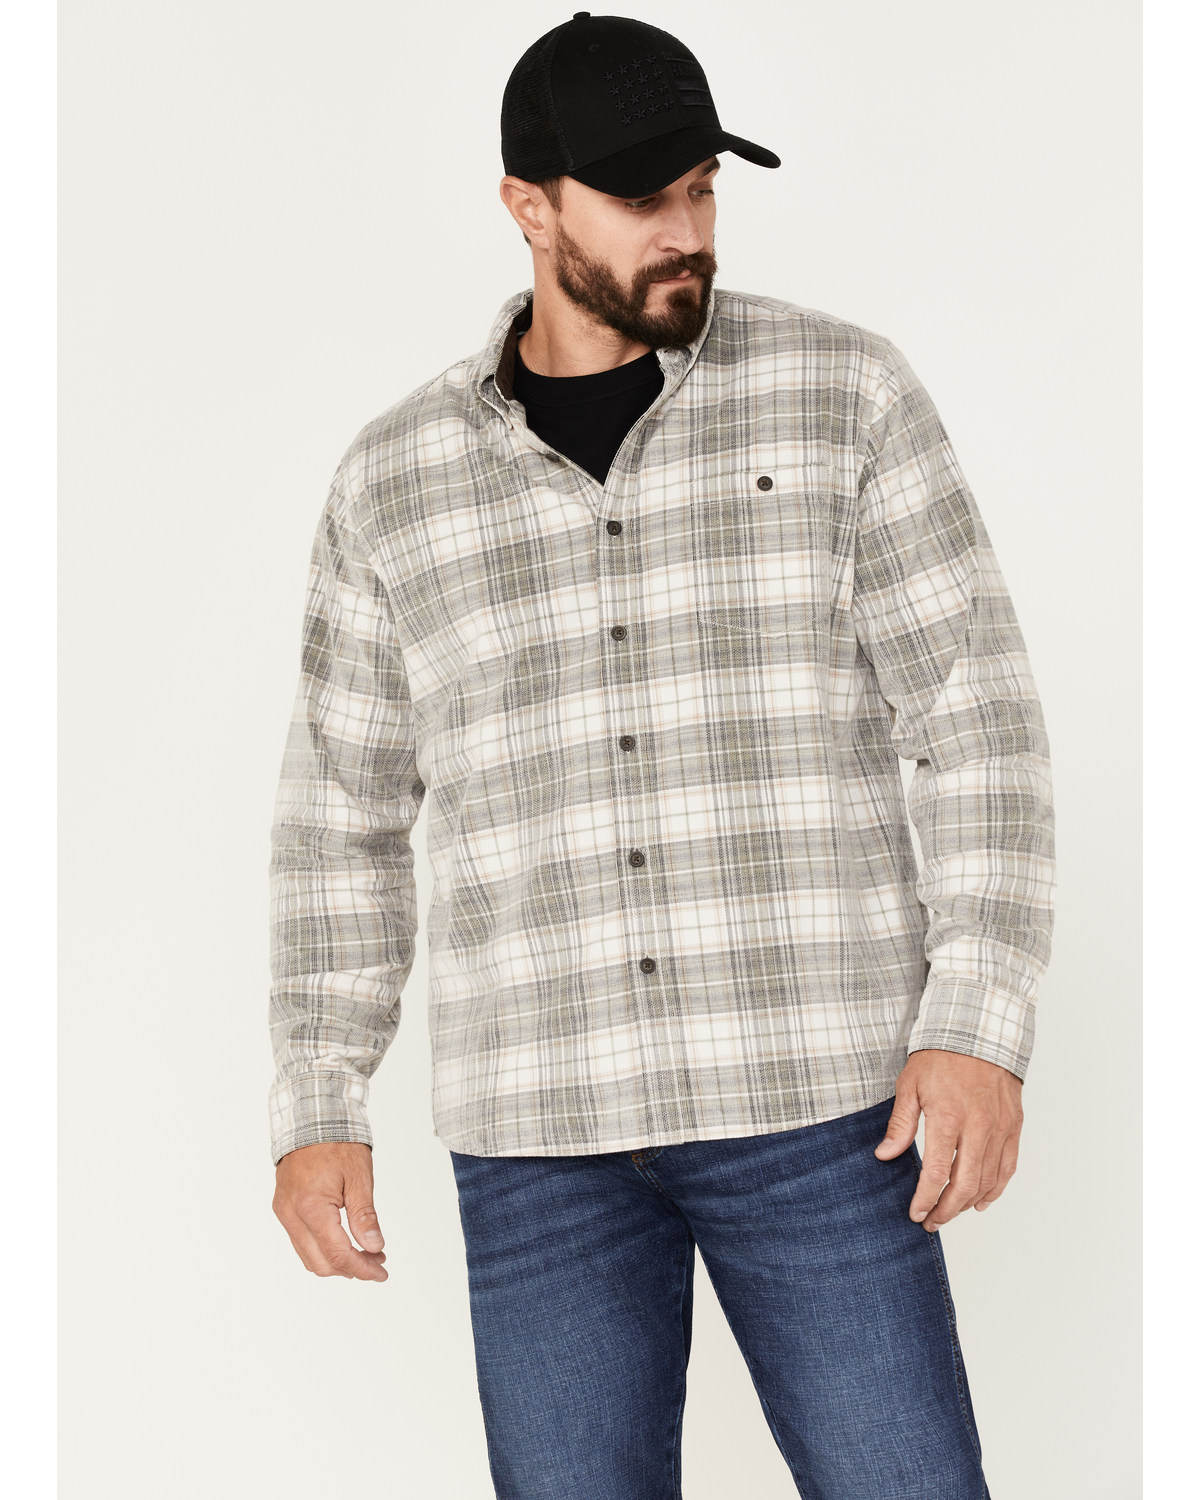 North River Men's Corduroy Medium Plaid Long Sleeve Button Down Shirt